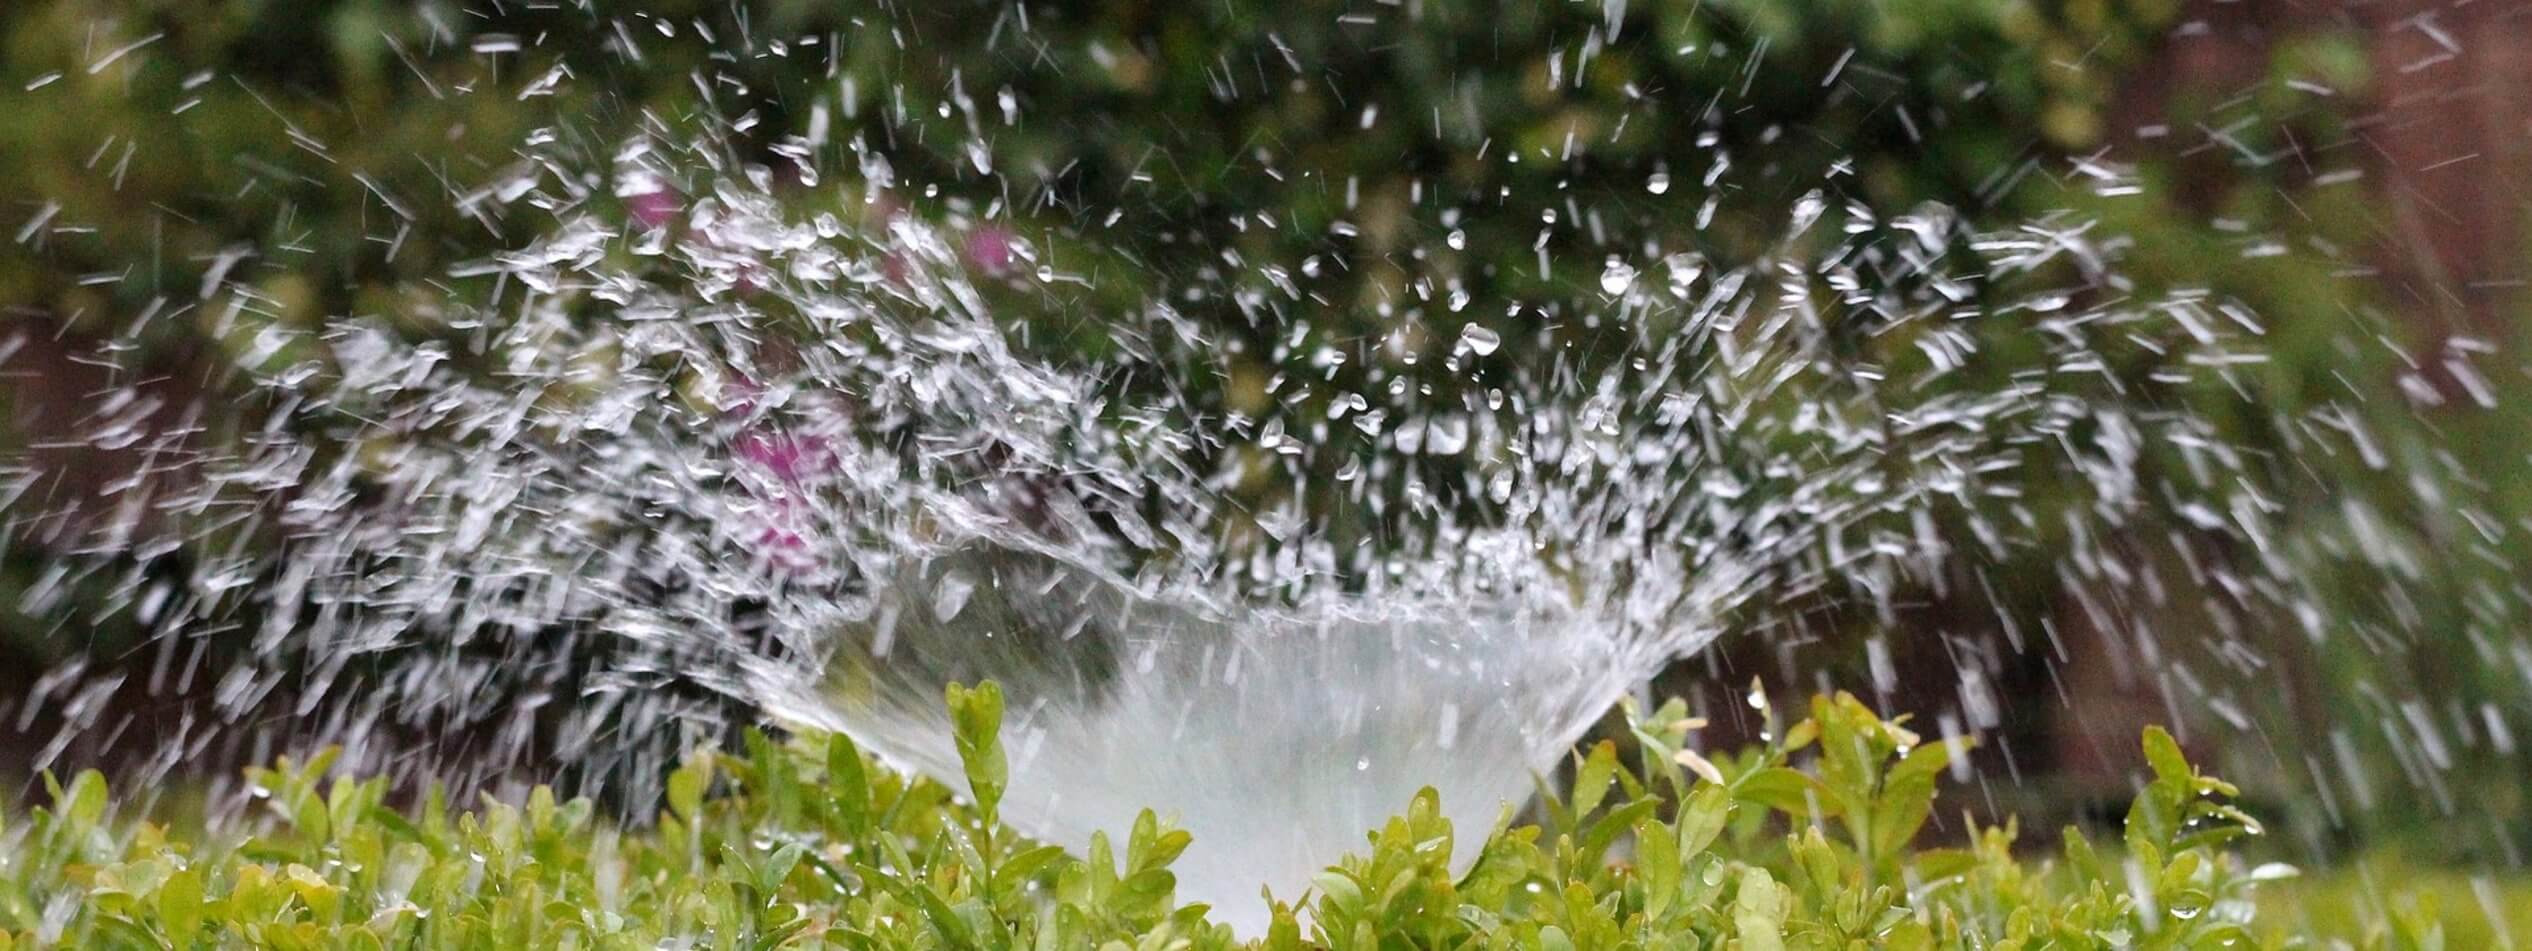 Irrigation water